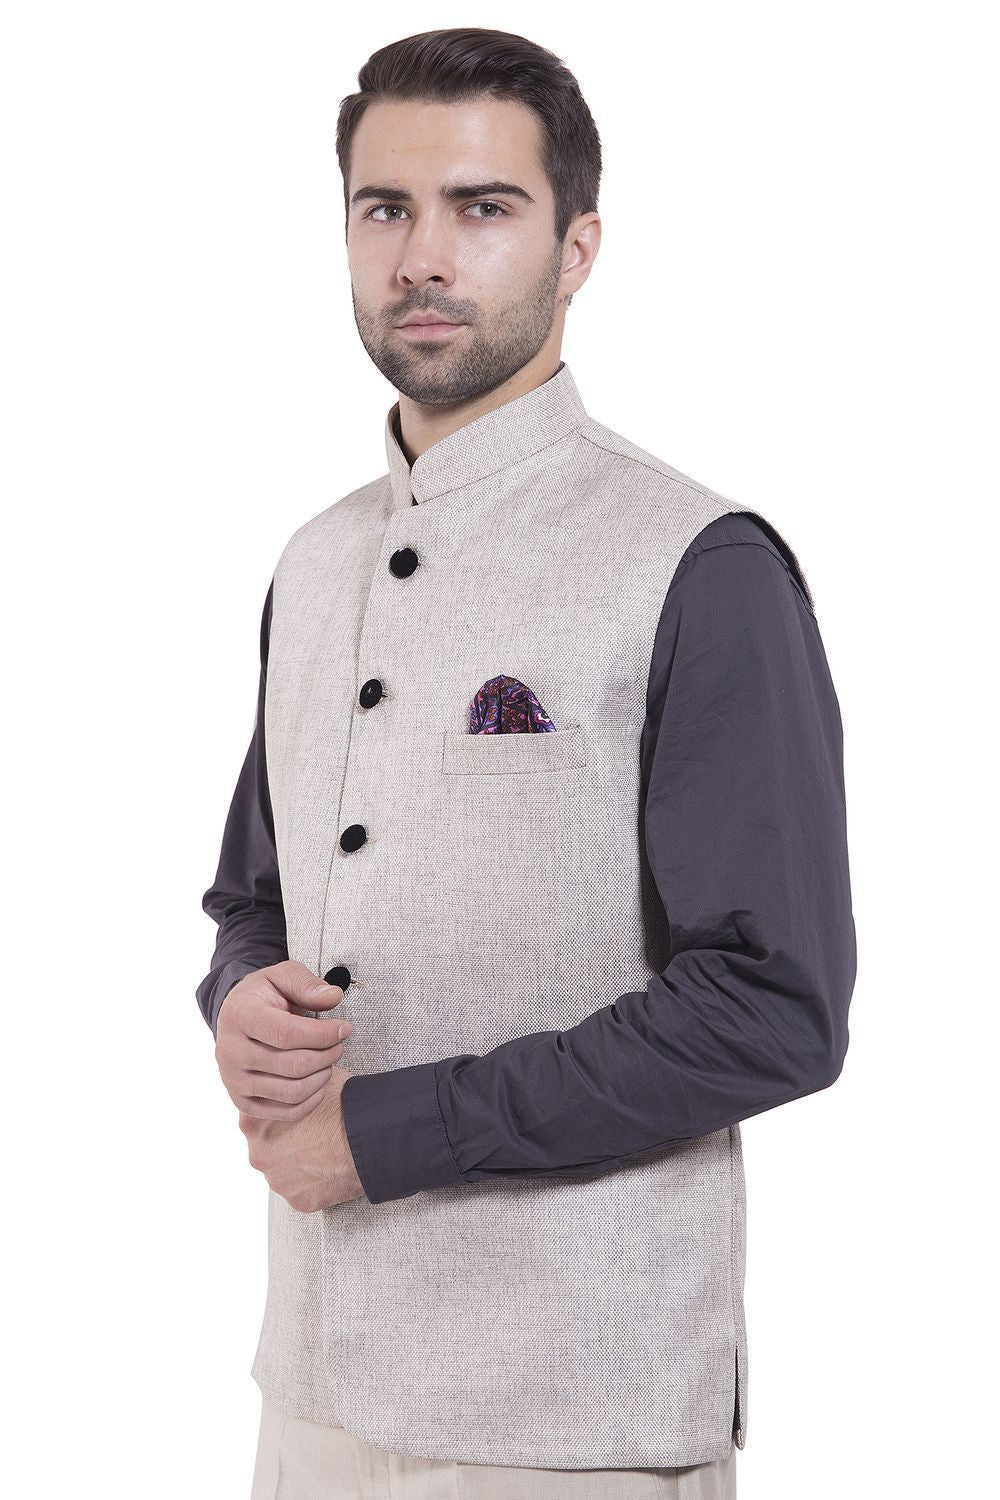 Rayon Silver Nehru Jacket